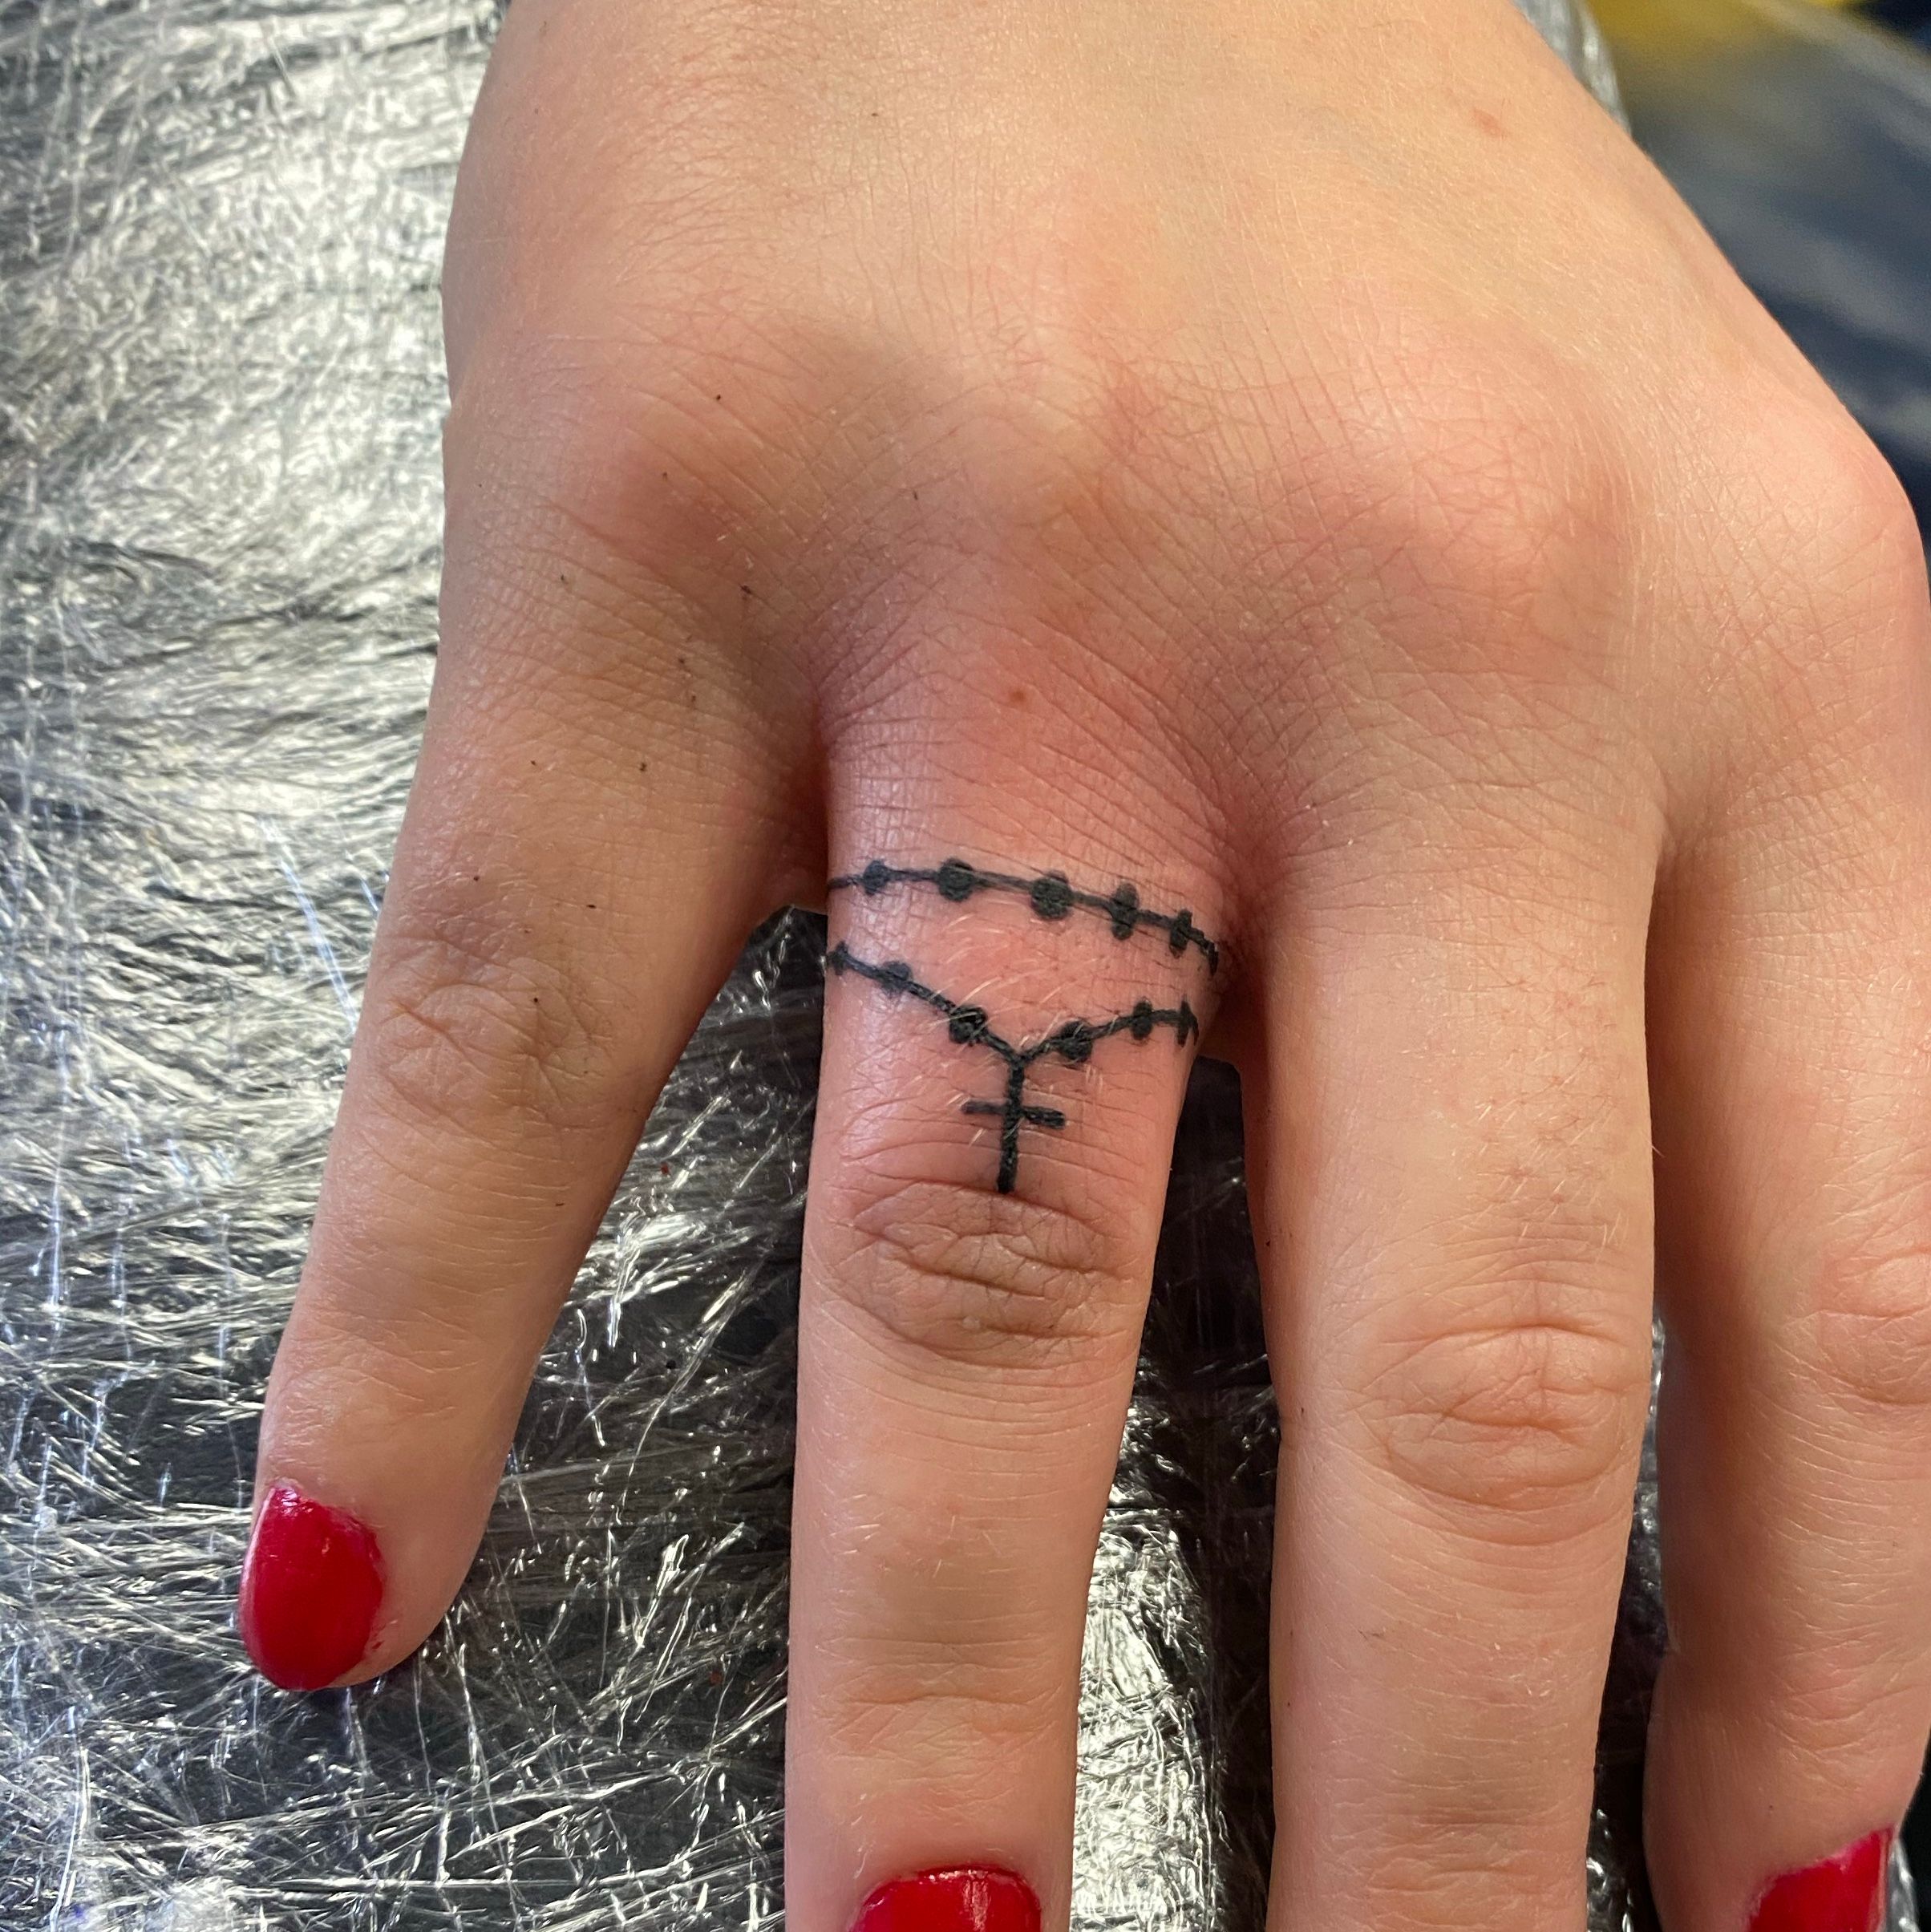 Phils Tattoo Studio  Rosary tattoo on finger rosary rosarytattoo cross  crosstattoo fingertattoo smalltattoos girlstattoo cutetattoos  Tattooistparth philstattoostudio  Facebook